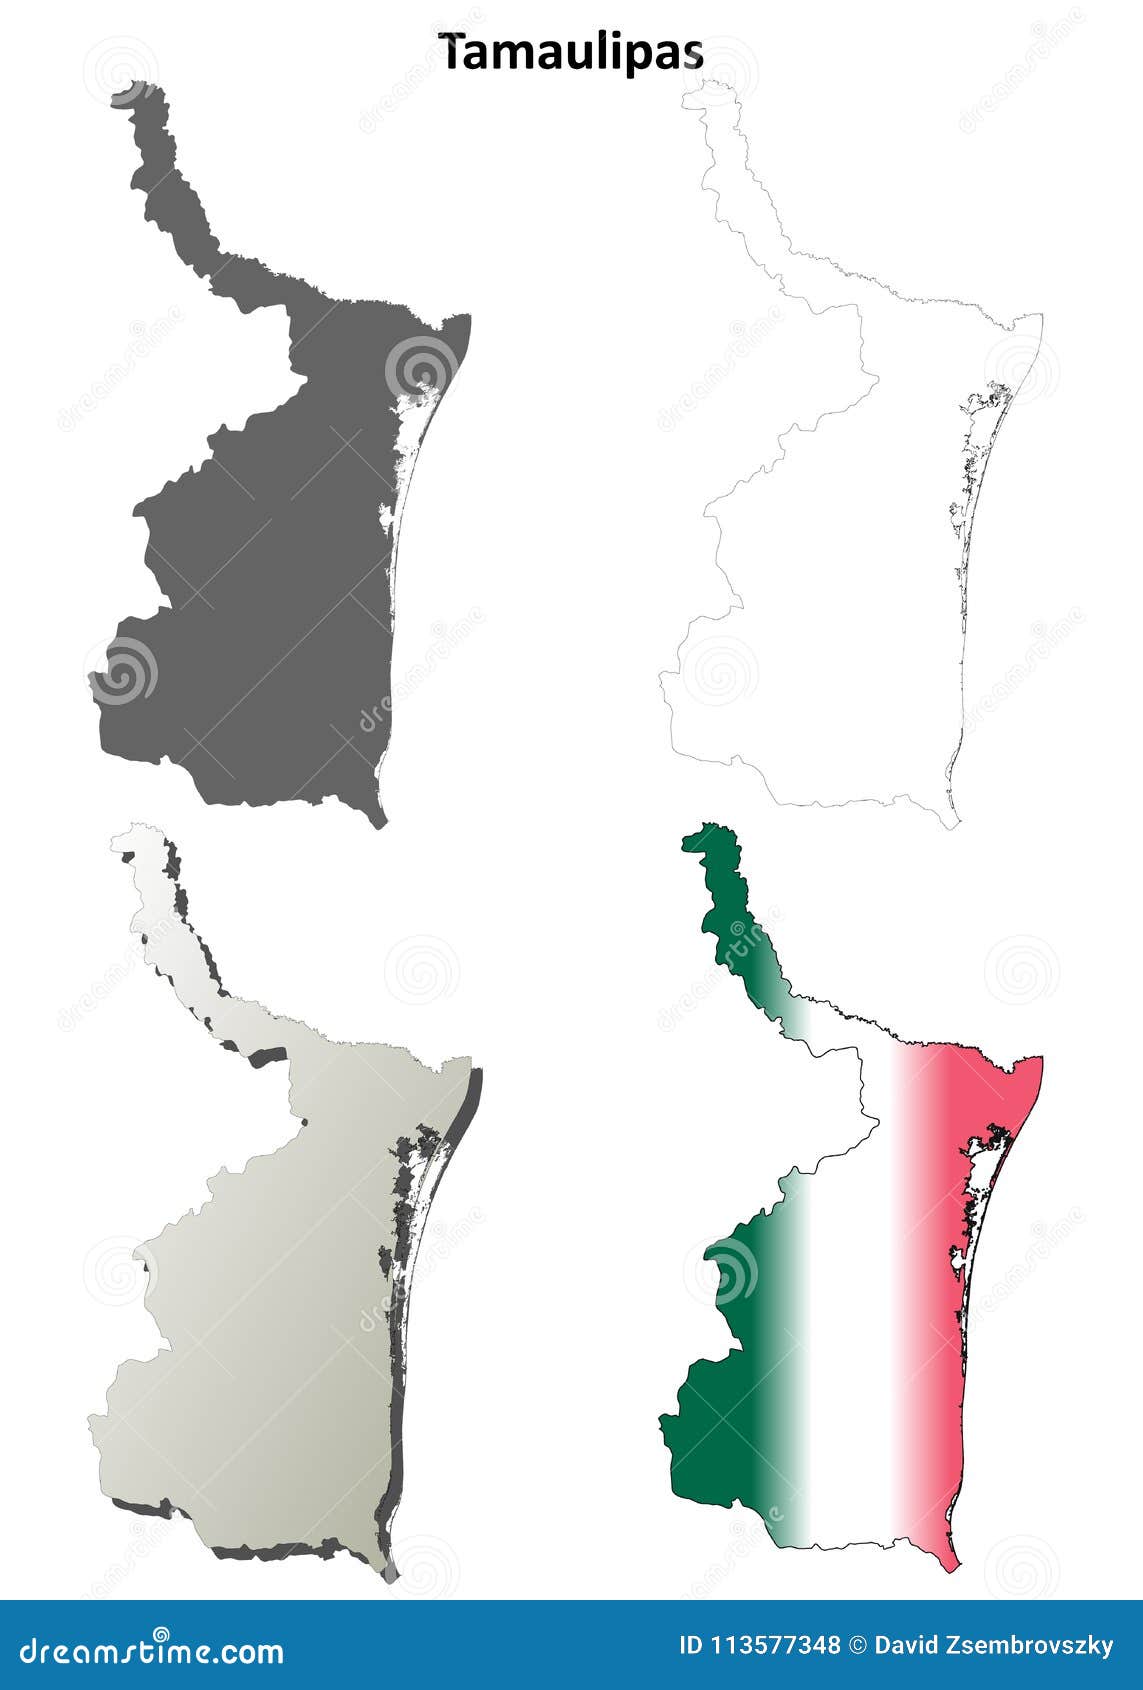 tamaulipas blank outline map set